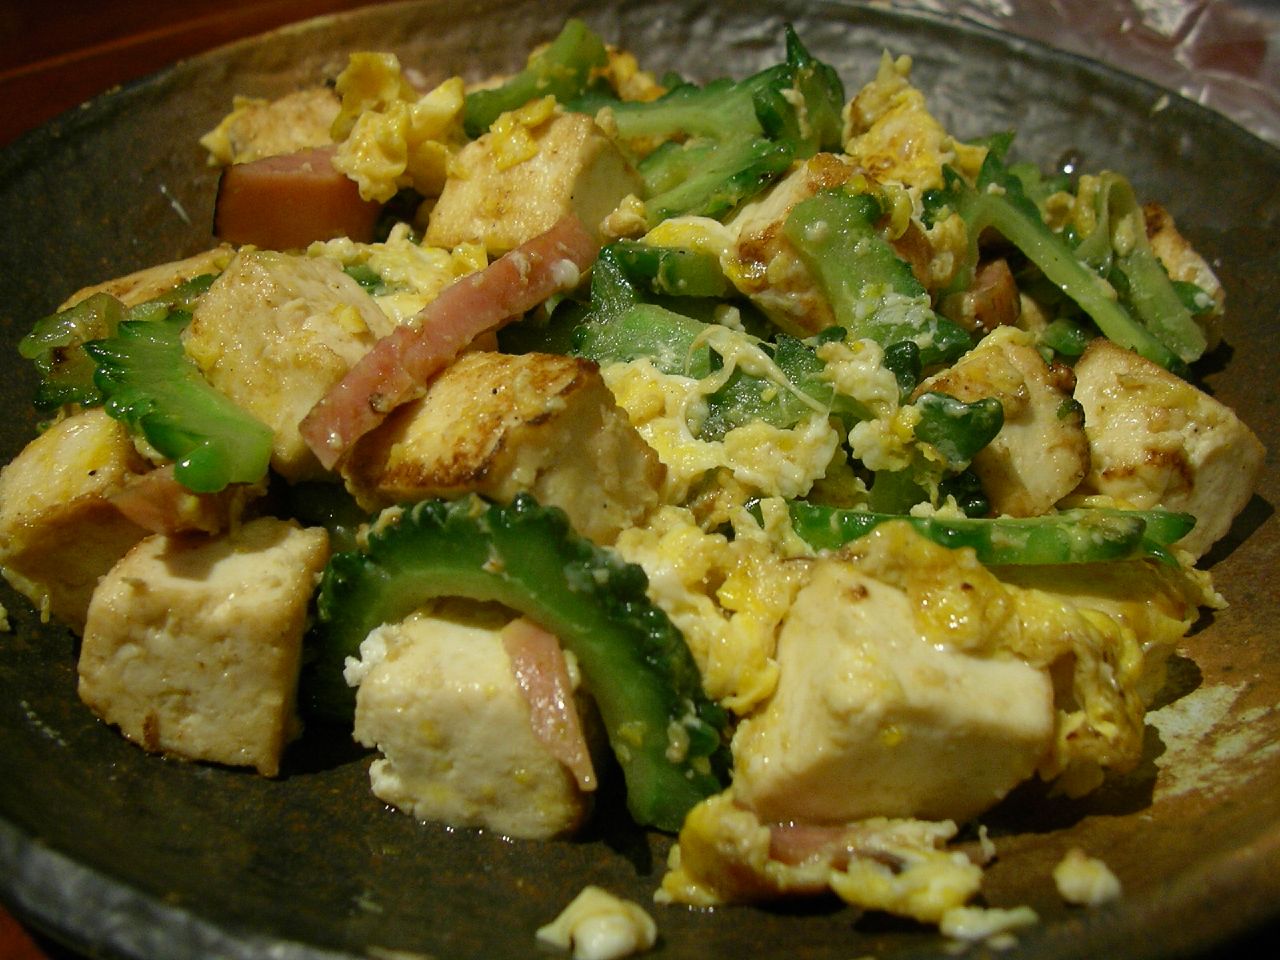 Okinawa's Goya chanpuruu and bitter melon dish